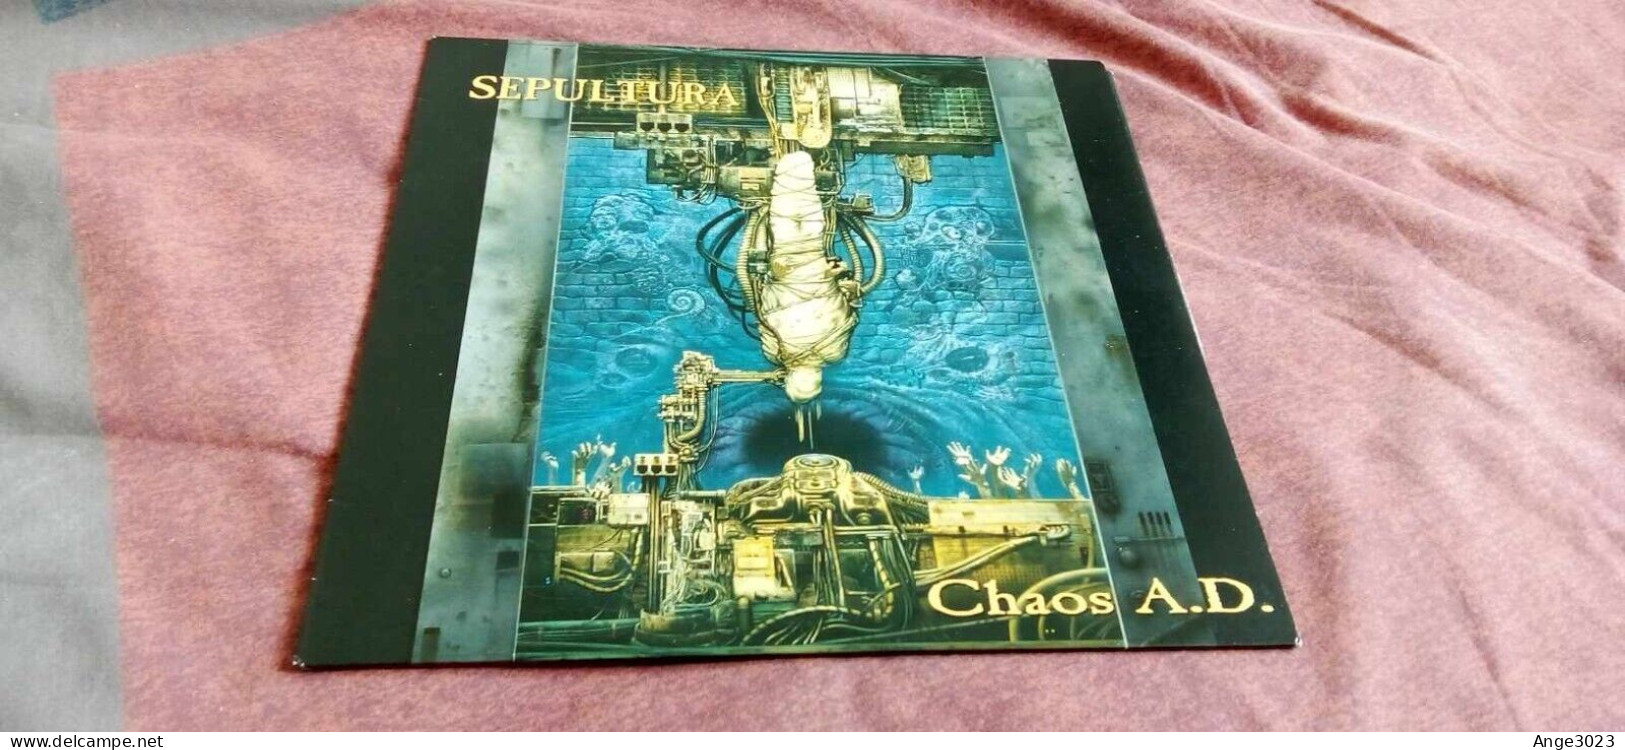 SEPULTURA "Choas A.D." - Hard Rock & Metal